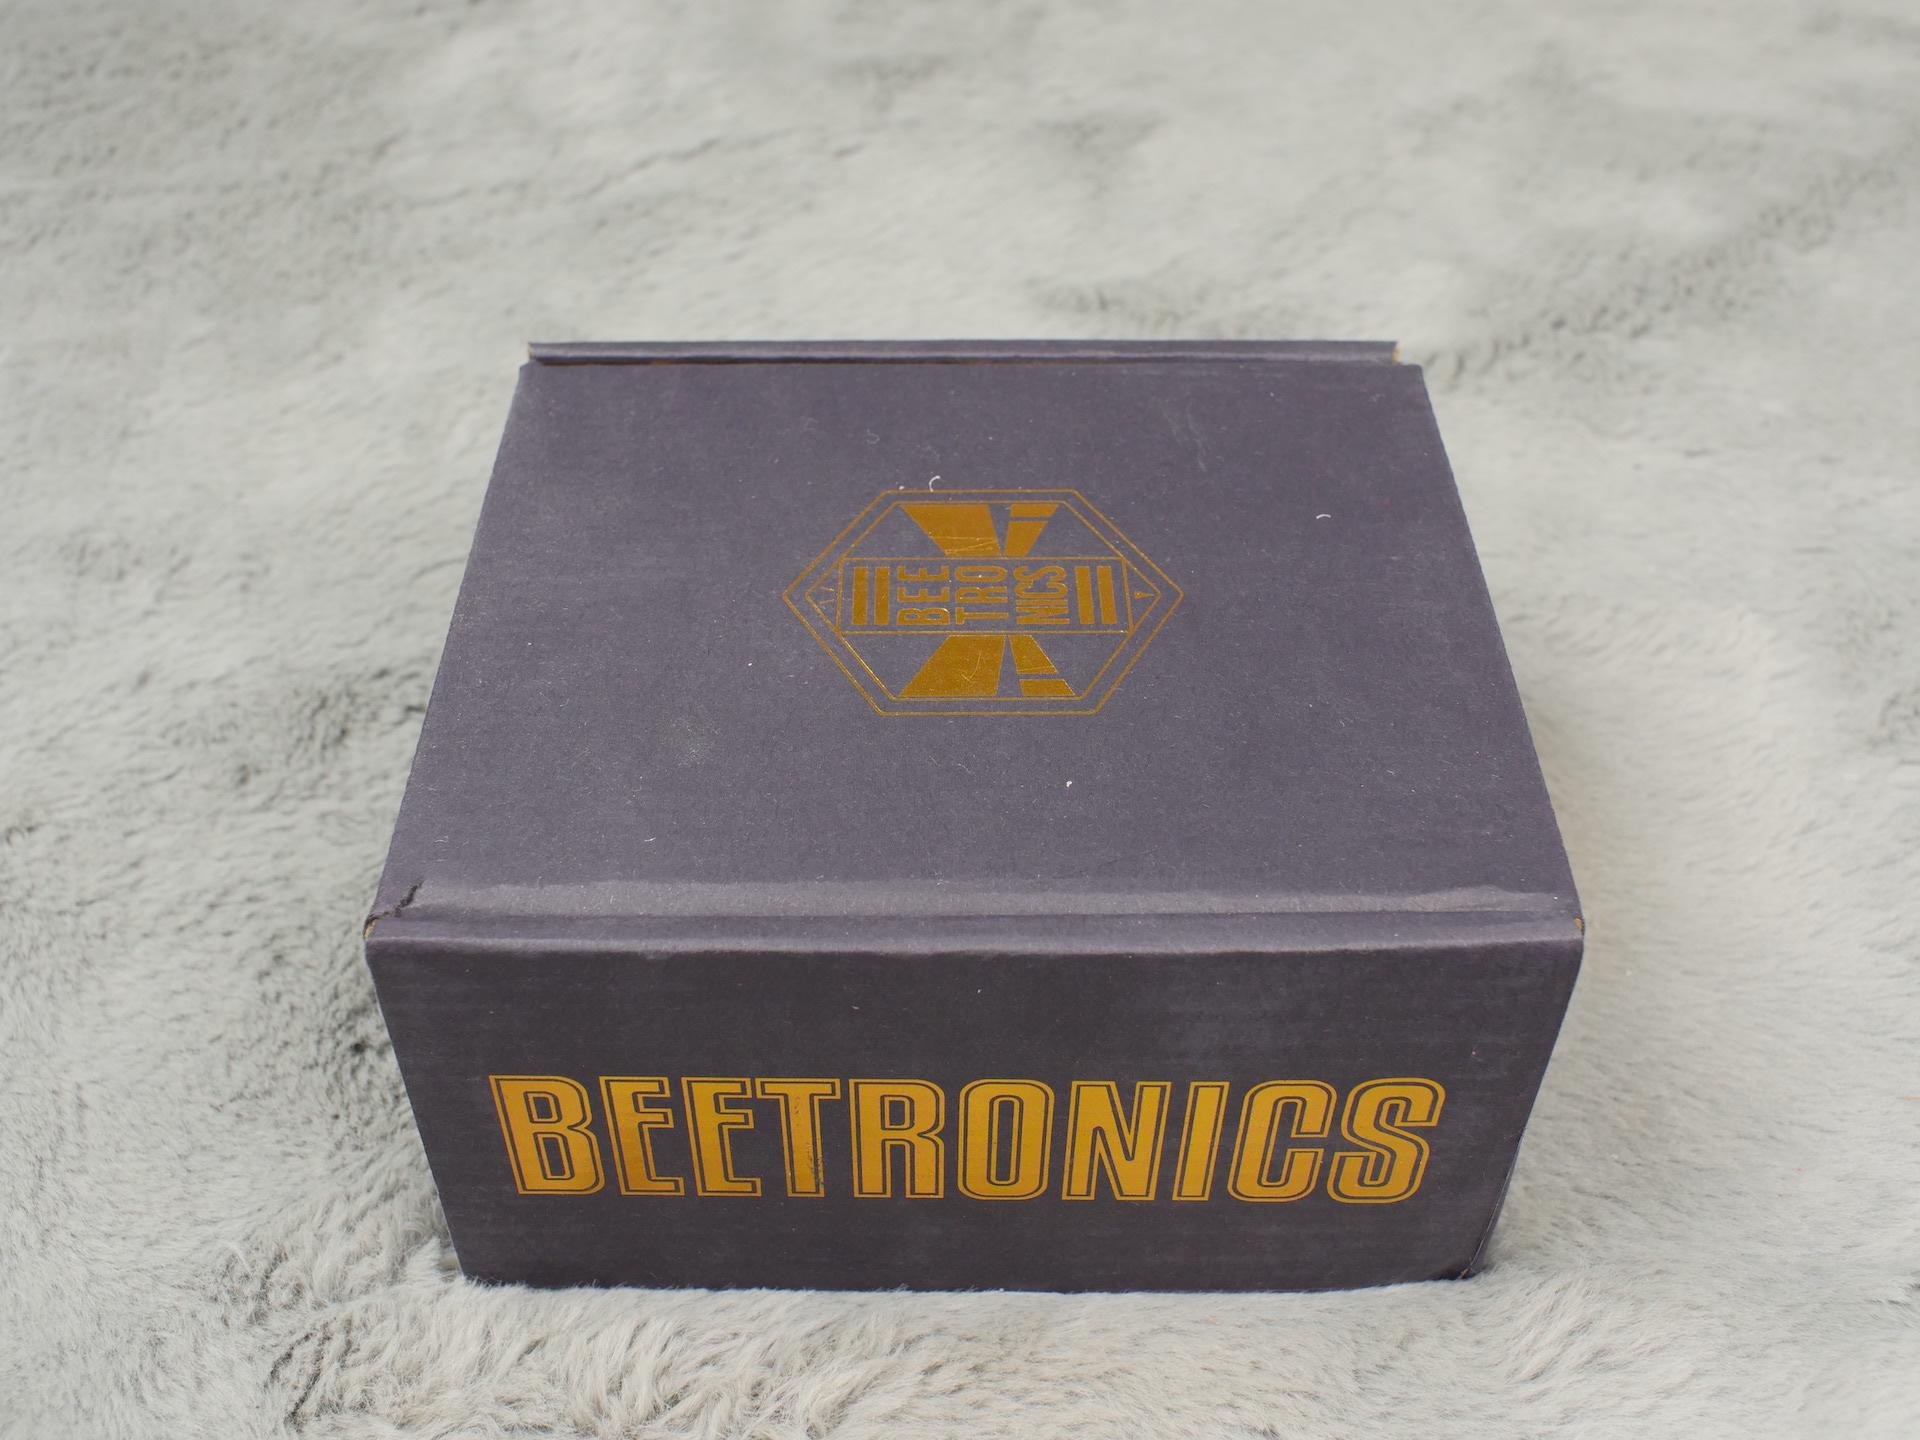 Beetronics Swarm 'Irish' Limited Edition